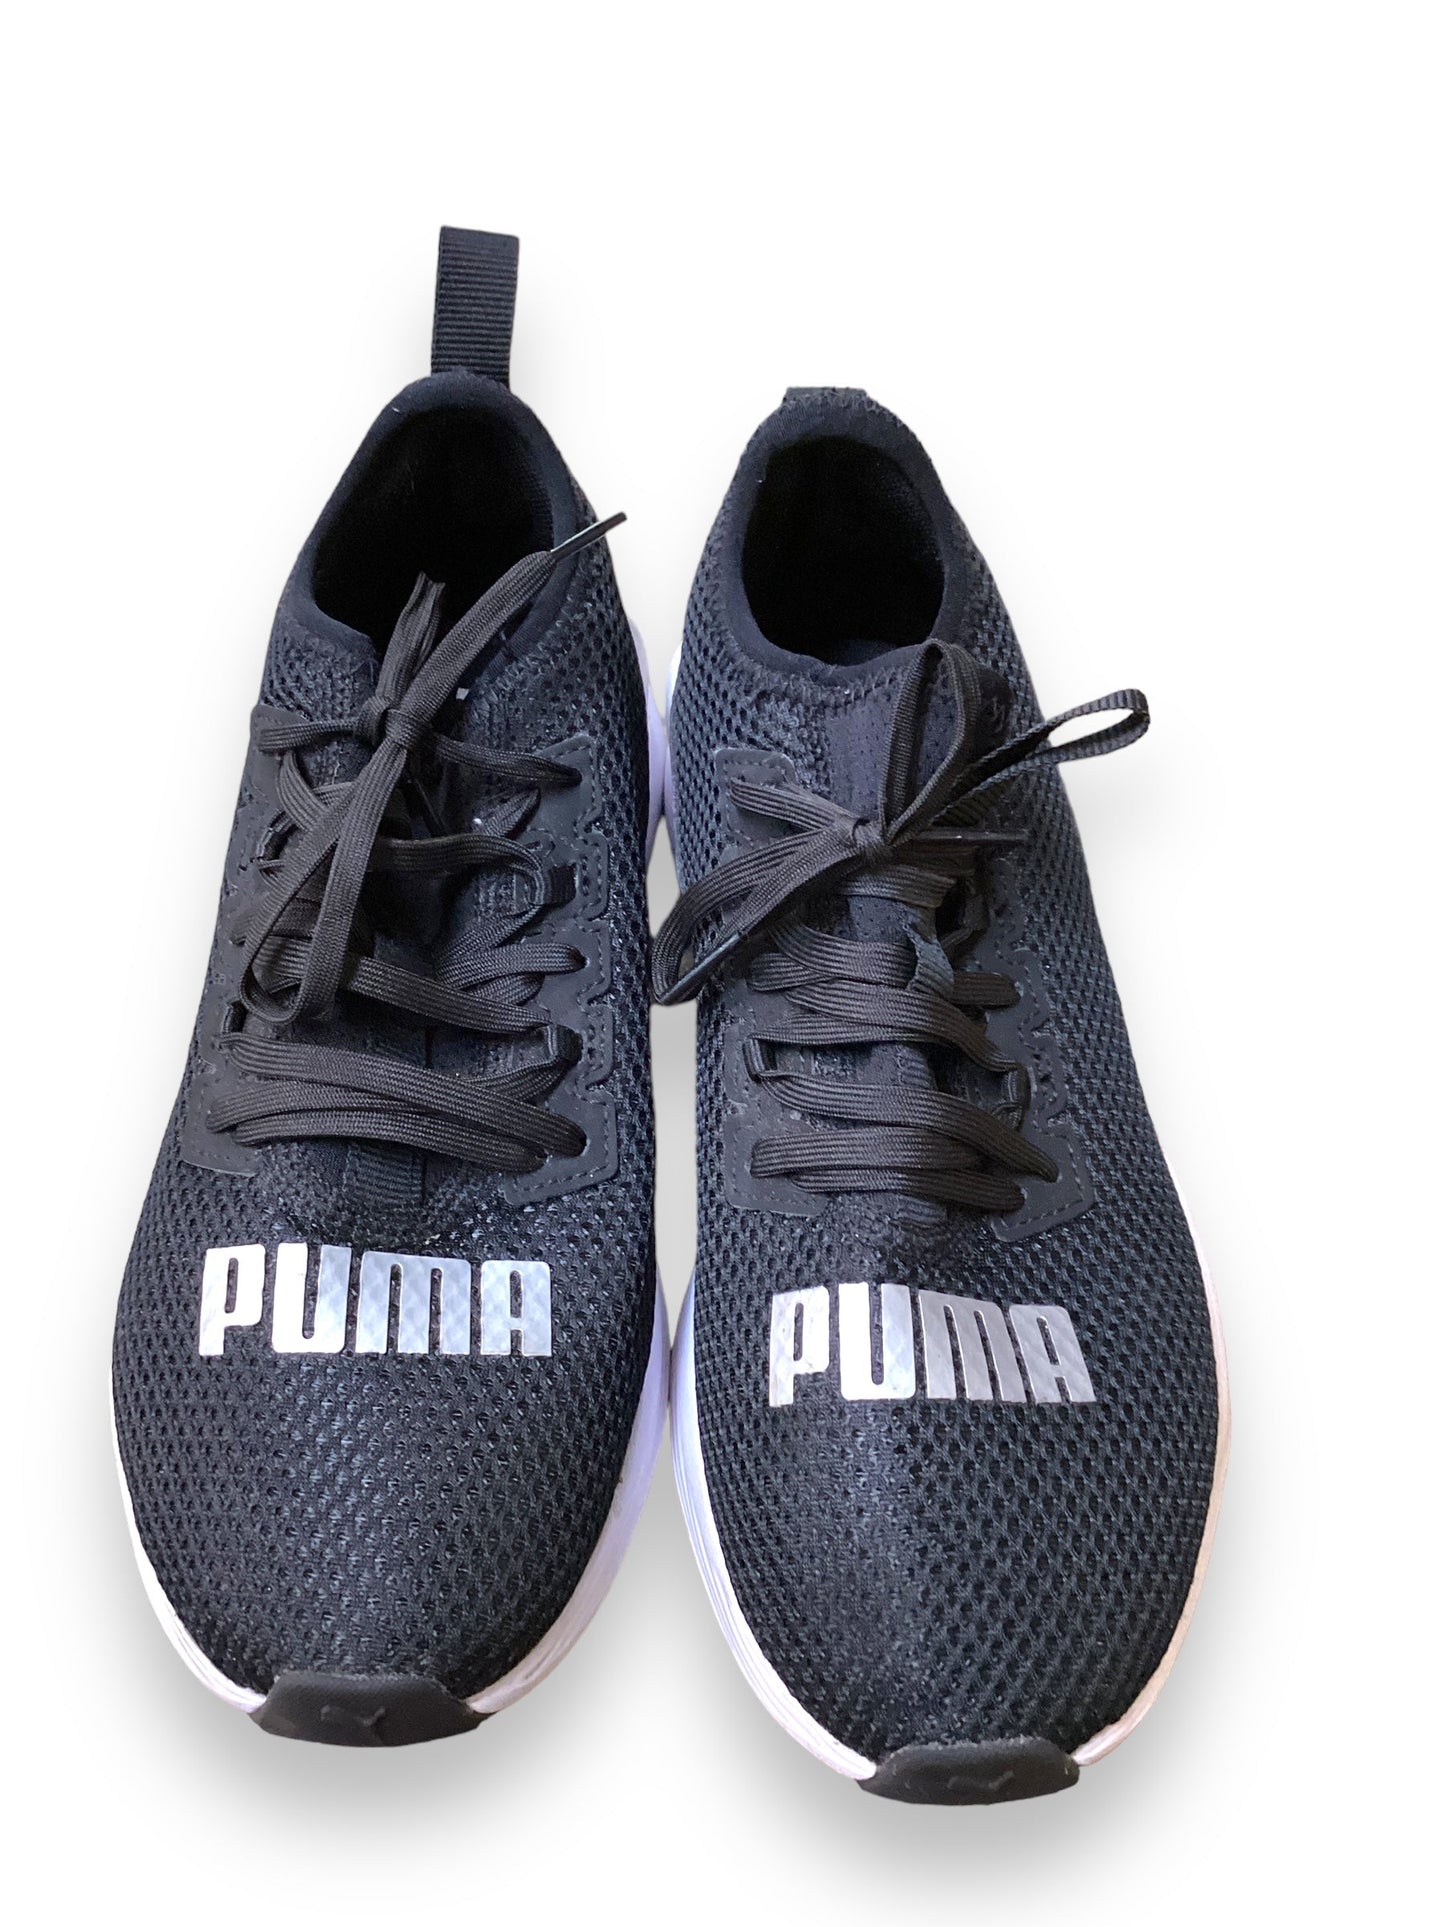 Black Shoes Athletic Puma, Size 7